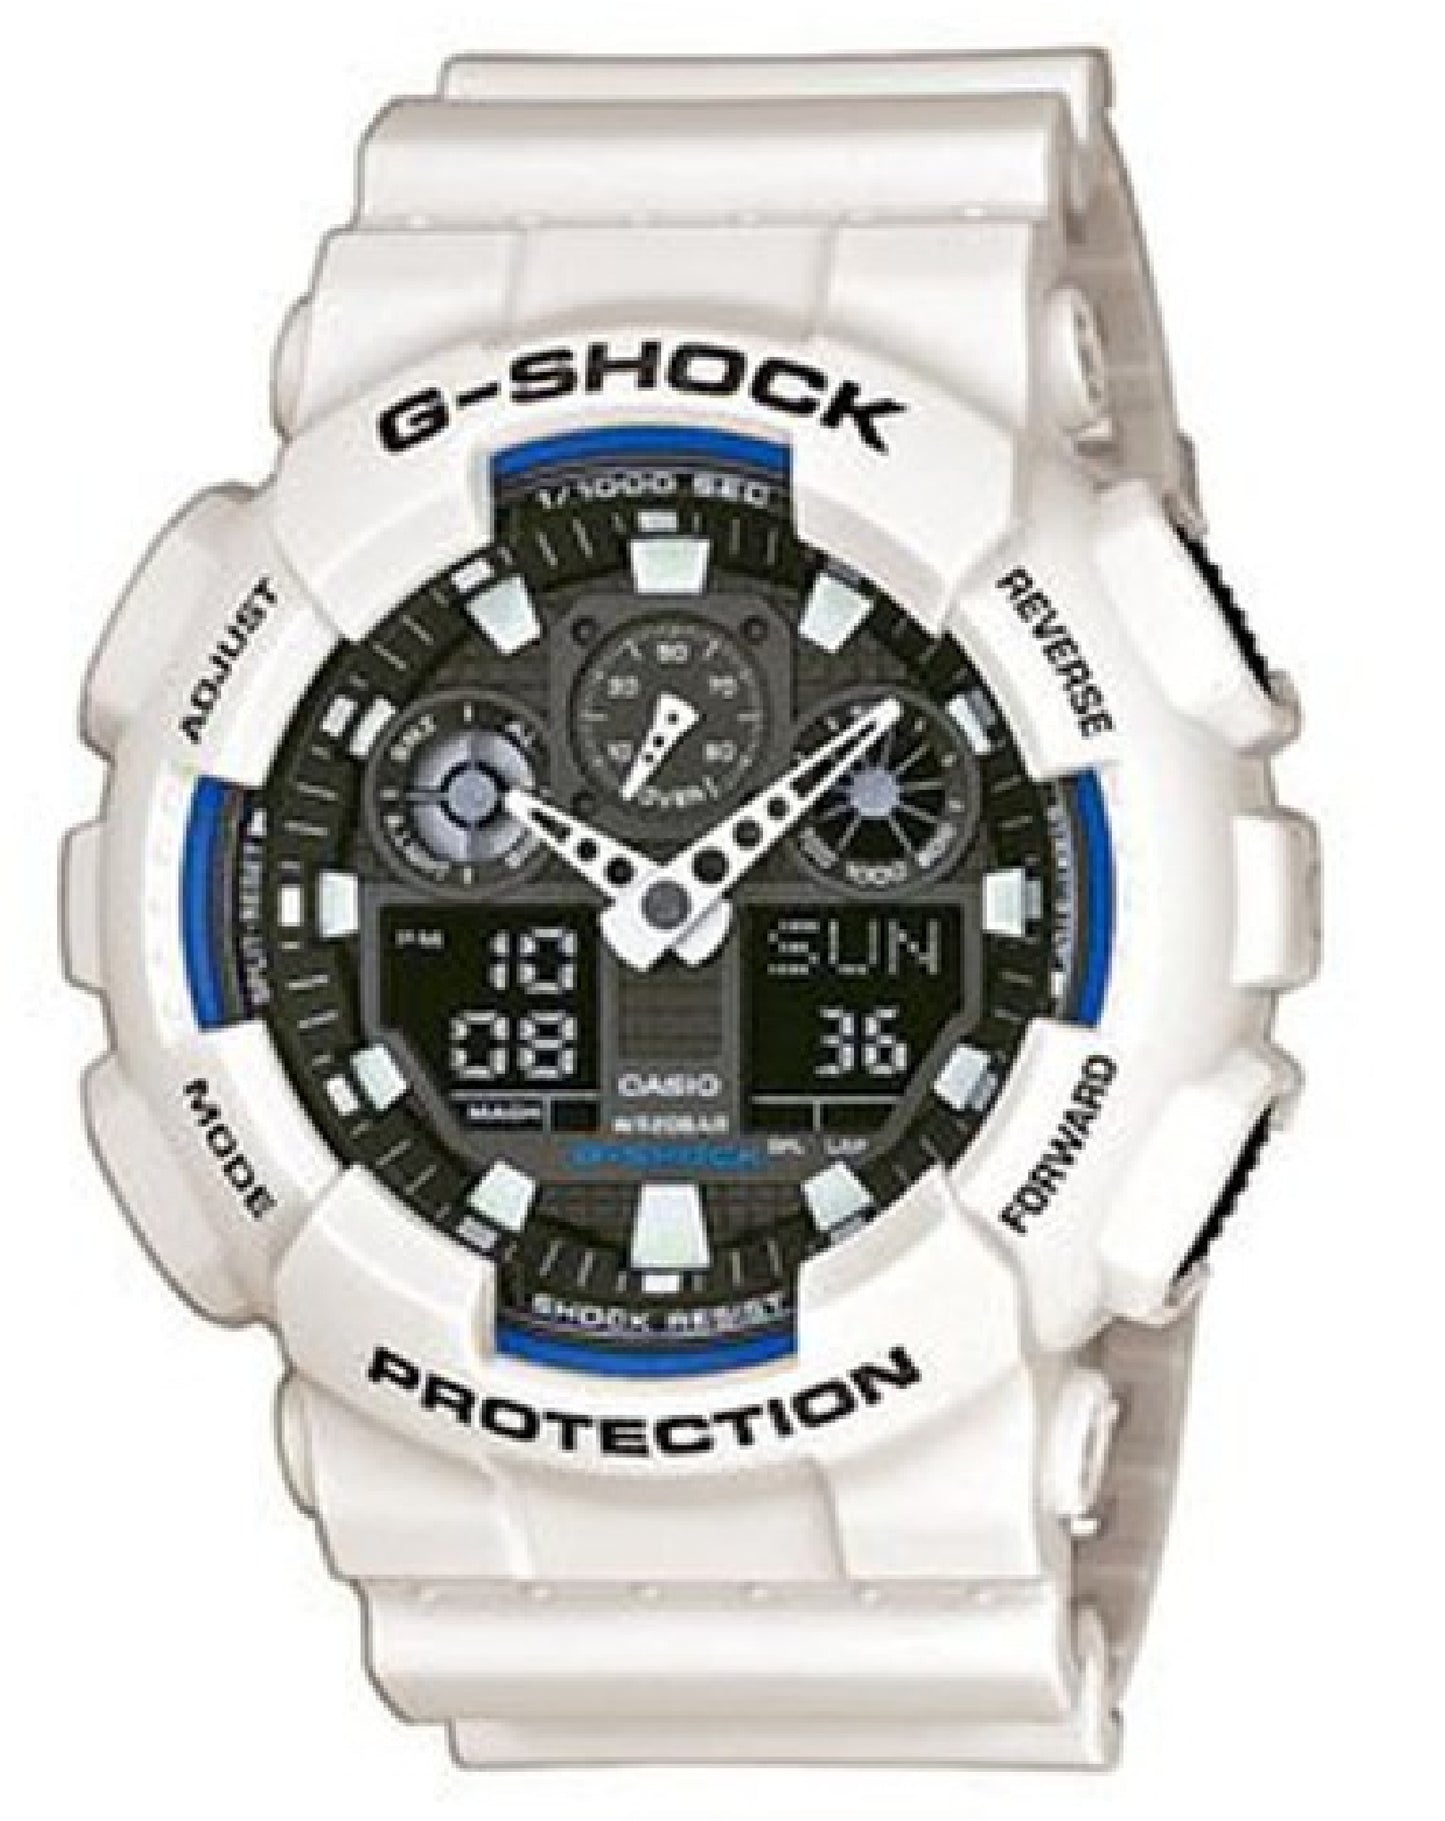 Casio GA-100B-7AER CASIO, G-SHOCK, Black Dial Watch